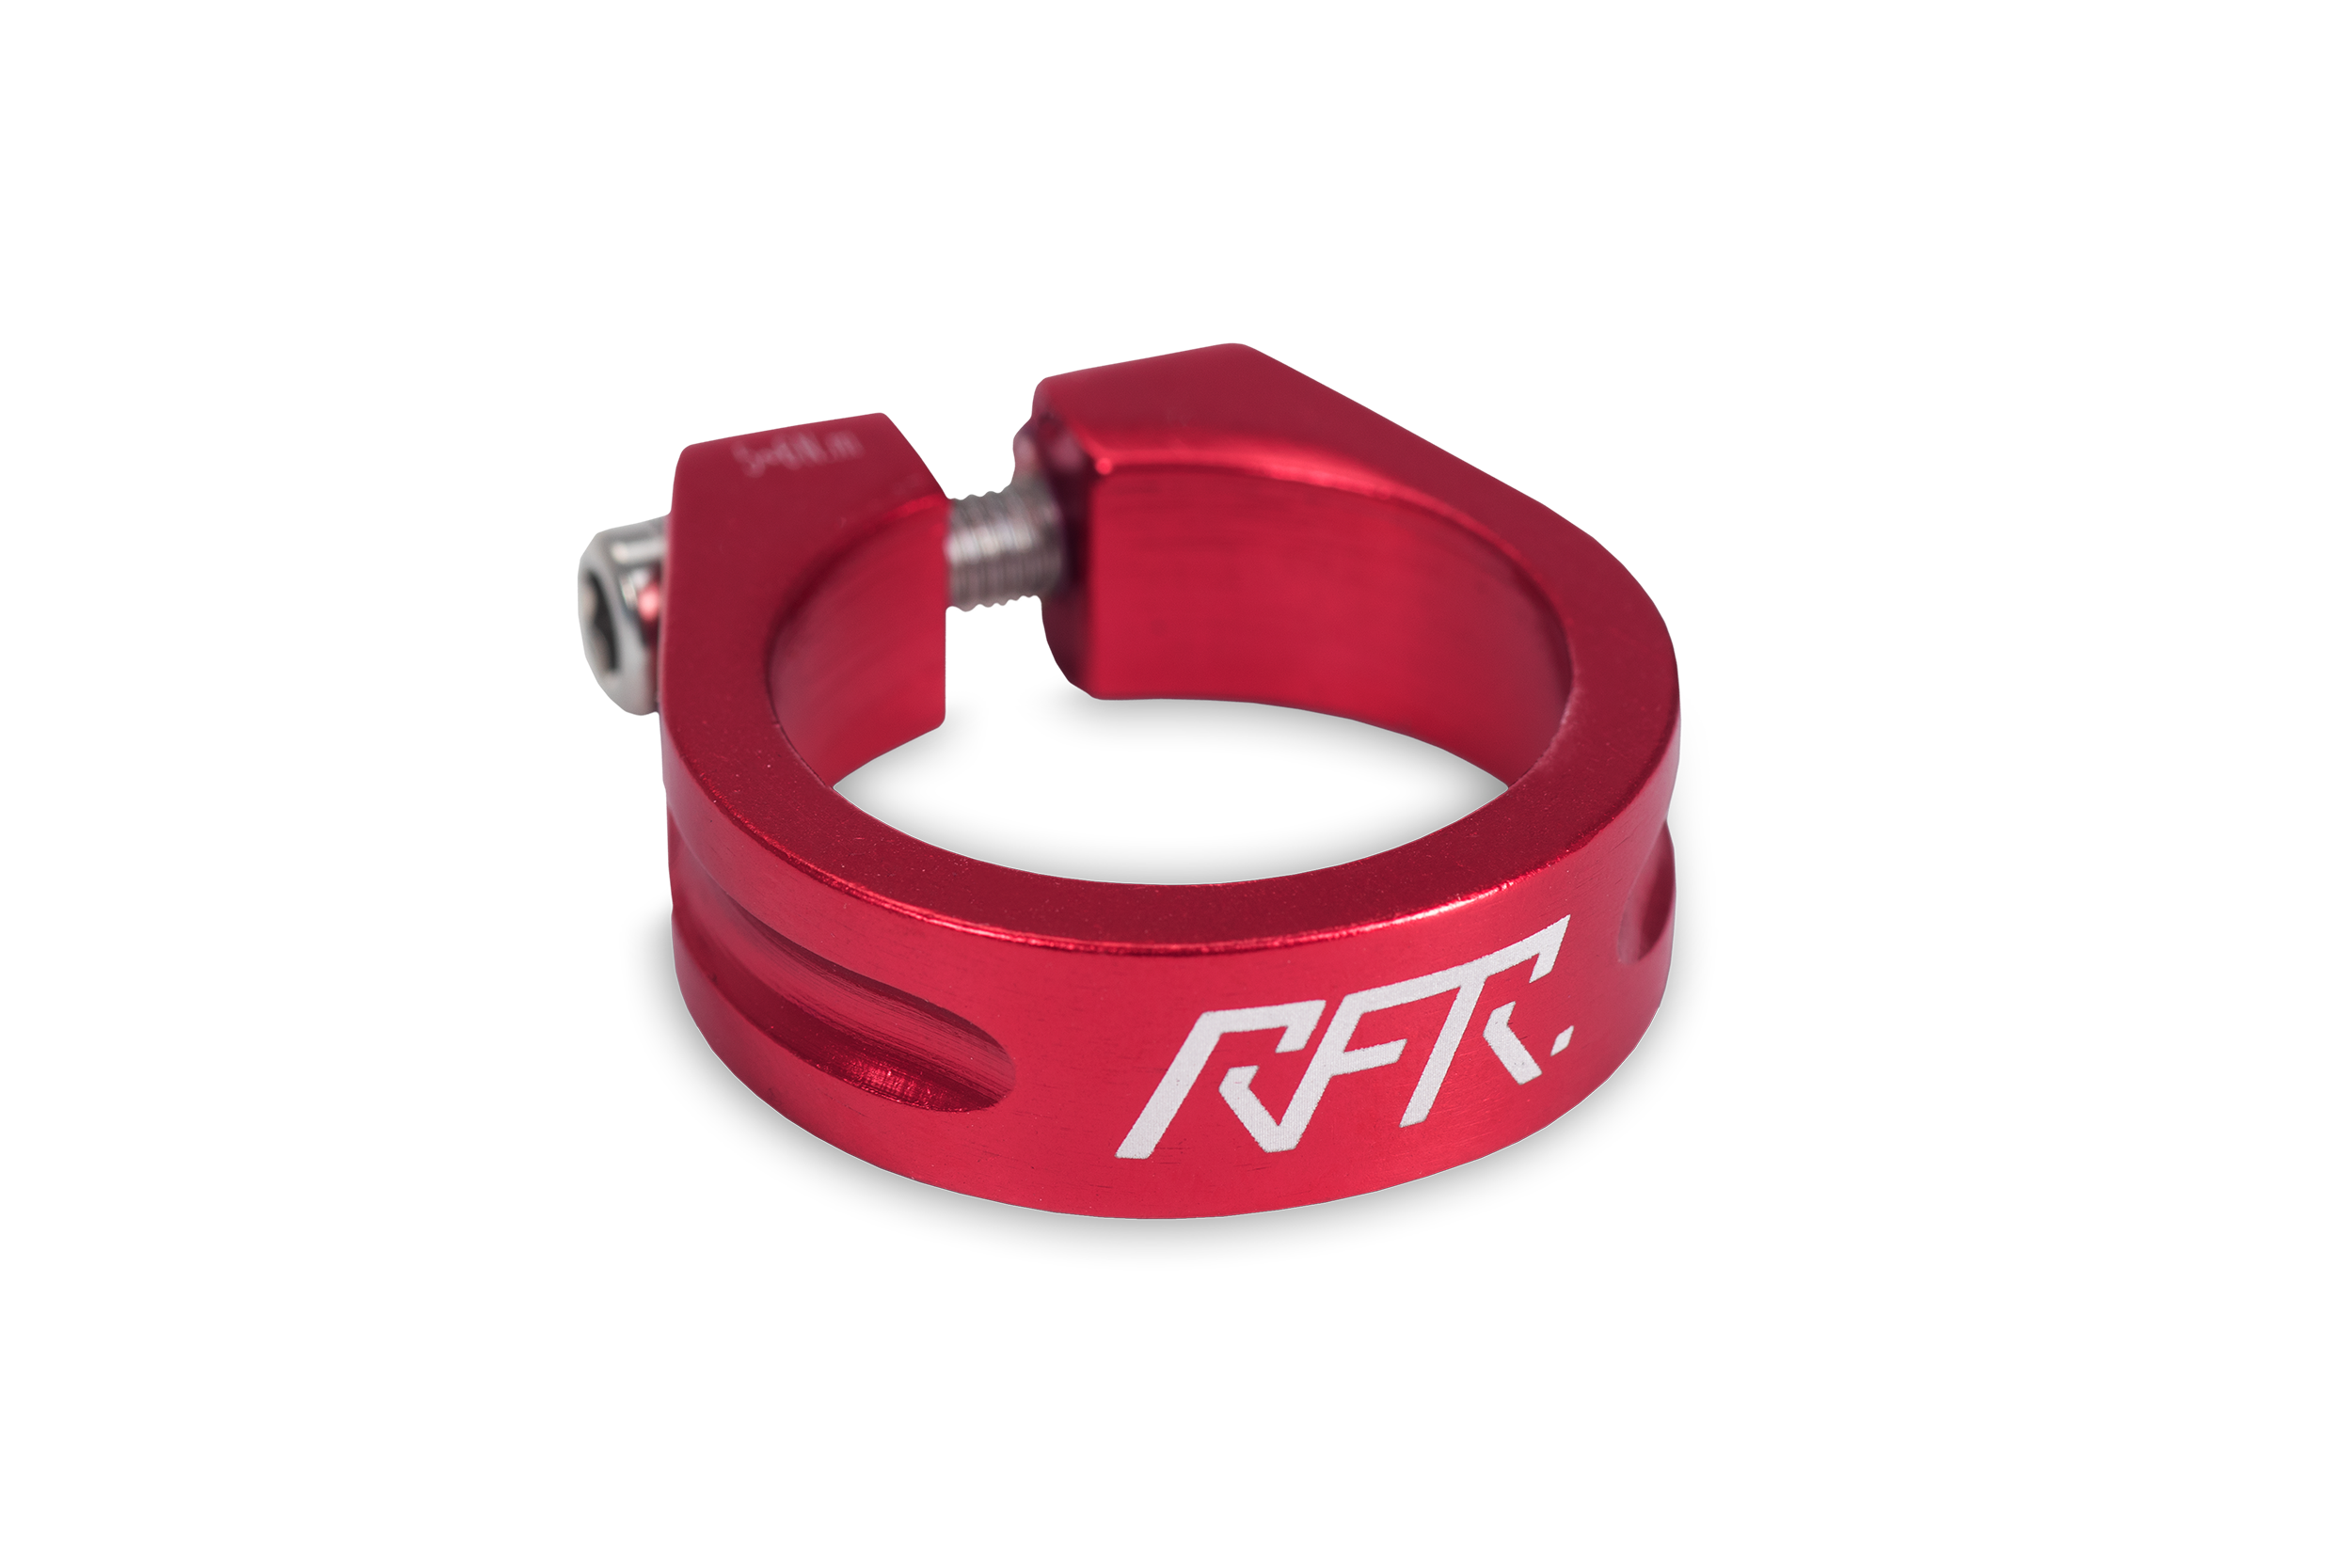 RFR Seatclamp 31,8 mm